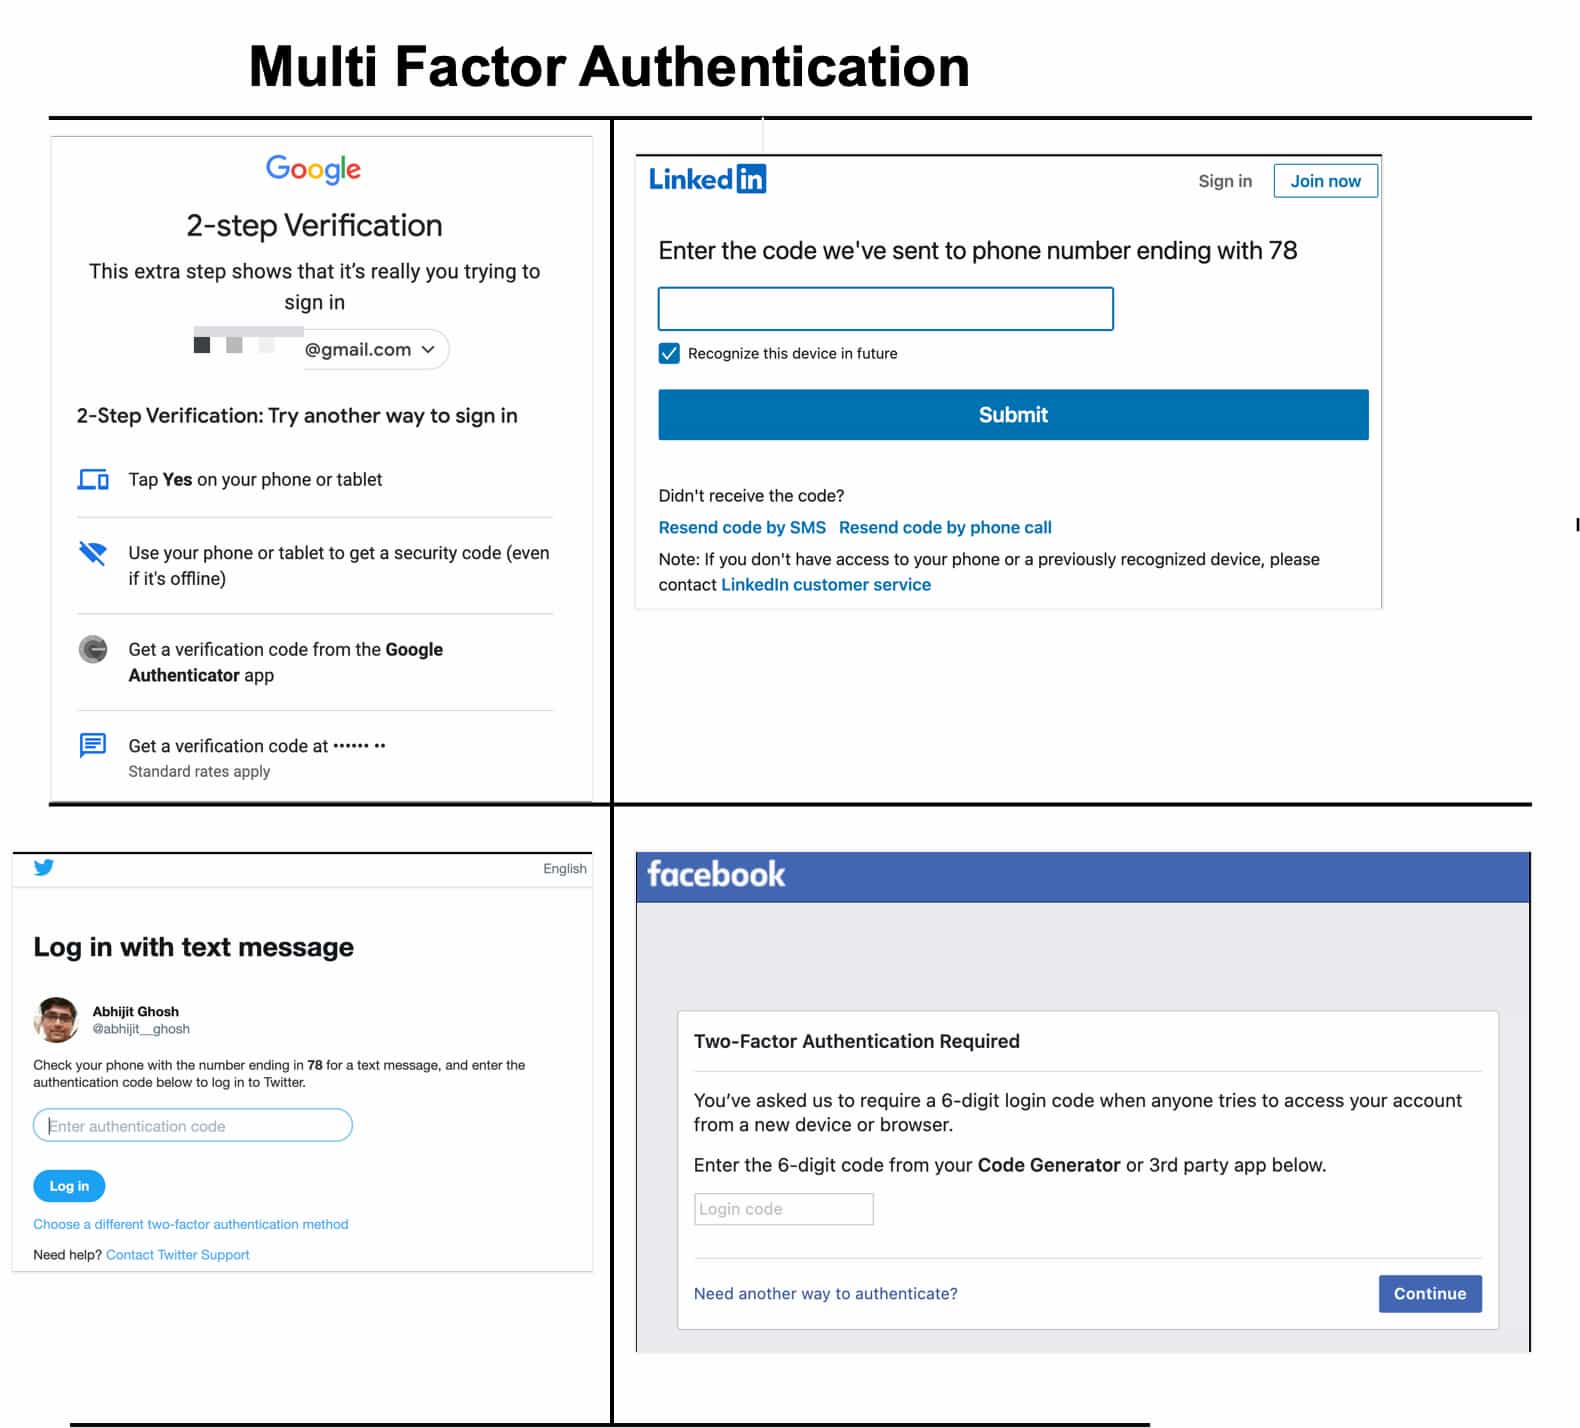 Multi-Factor Authentication (MFA) or 2-step verification - Gmail, Facebook, Twitter, LinkedIn